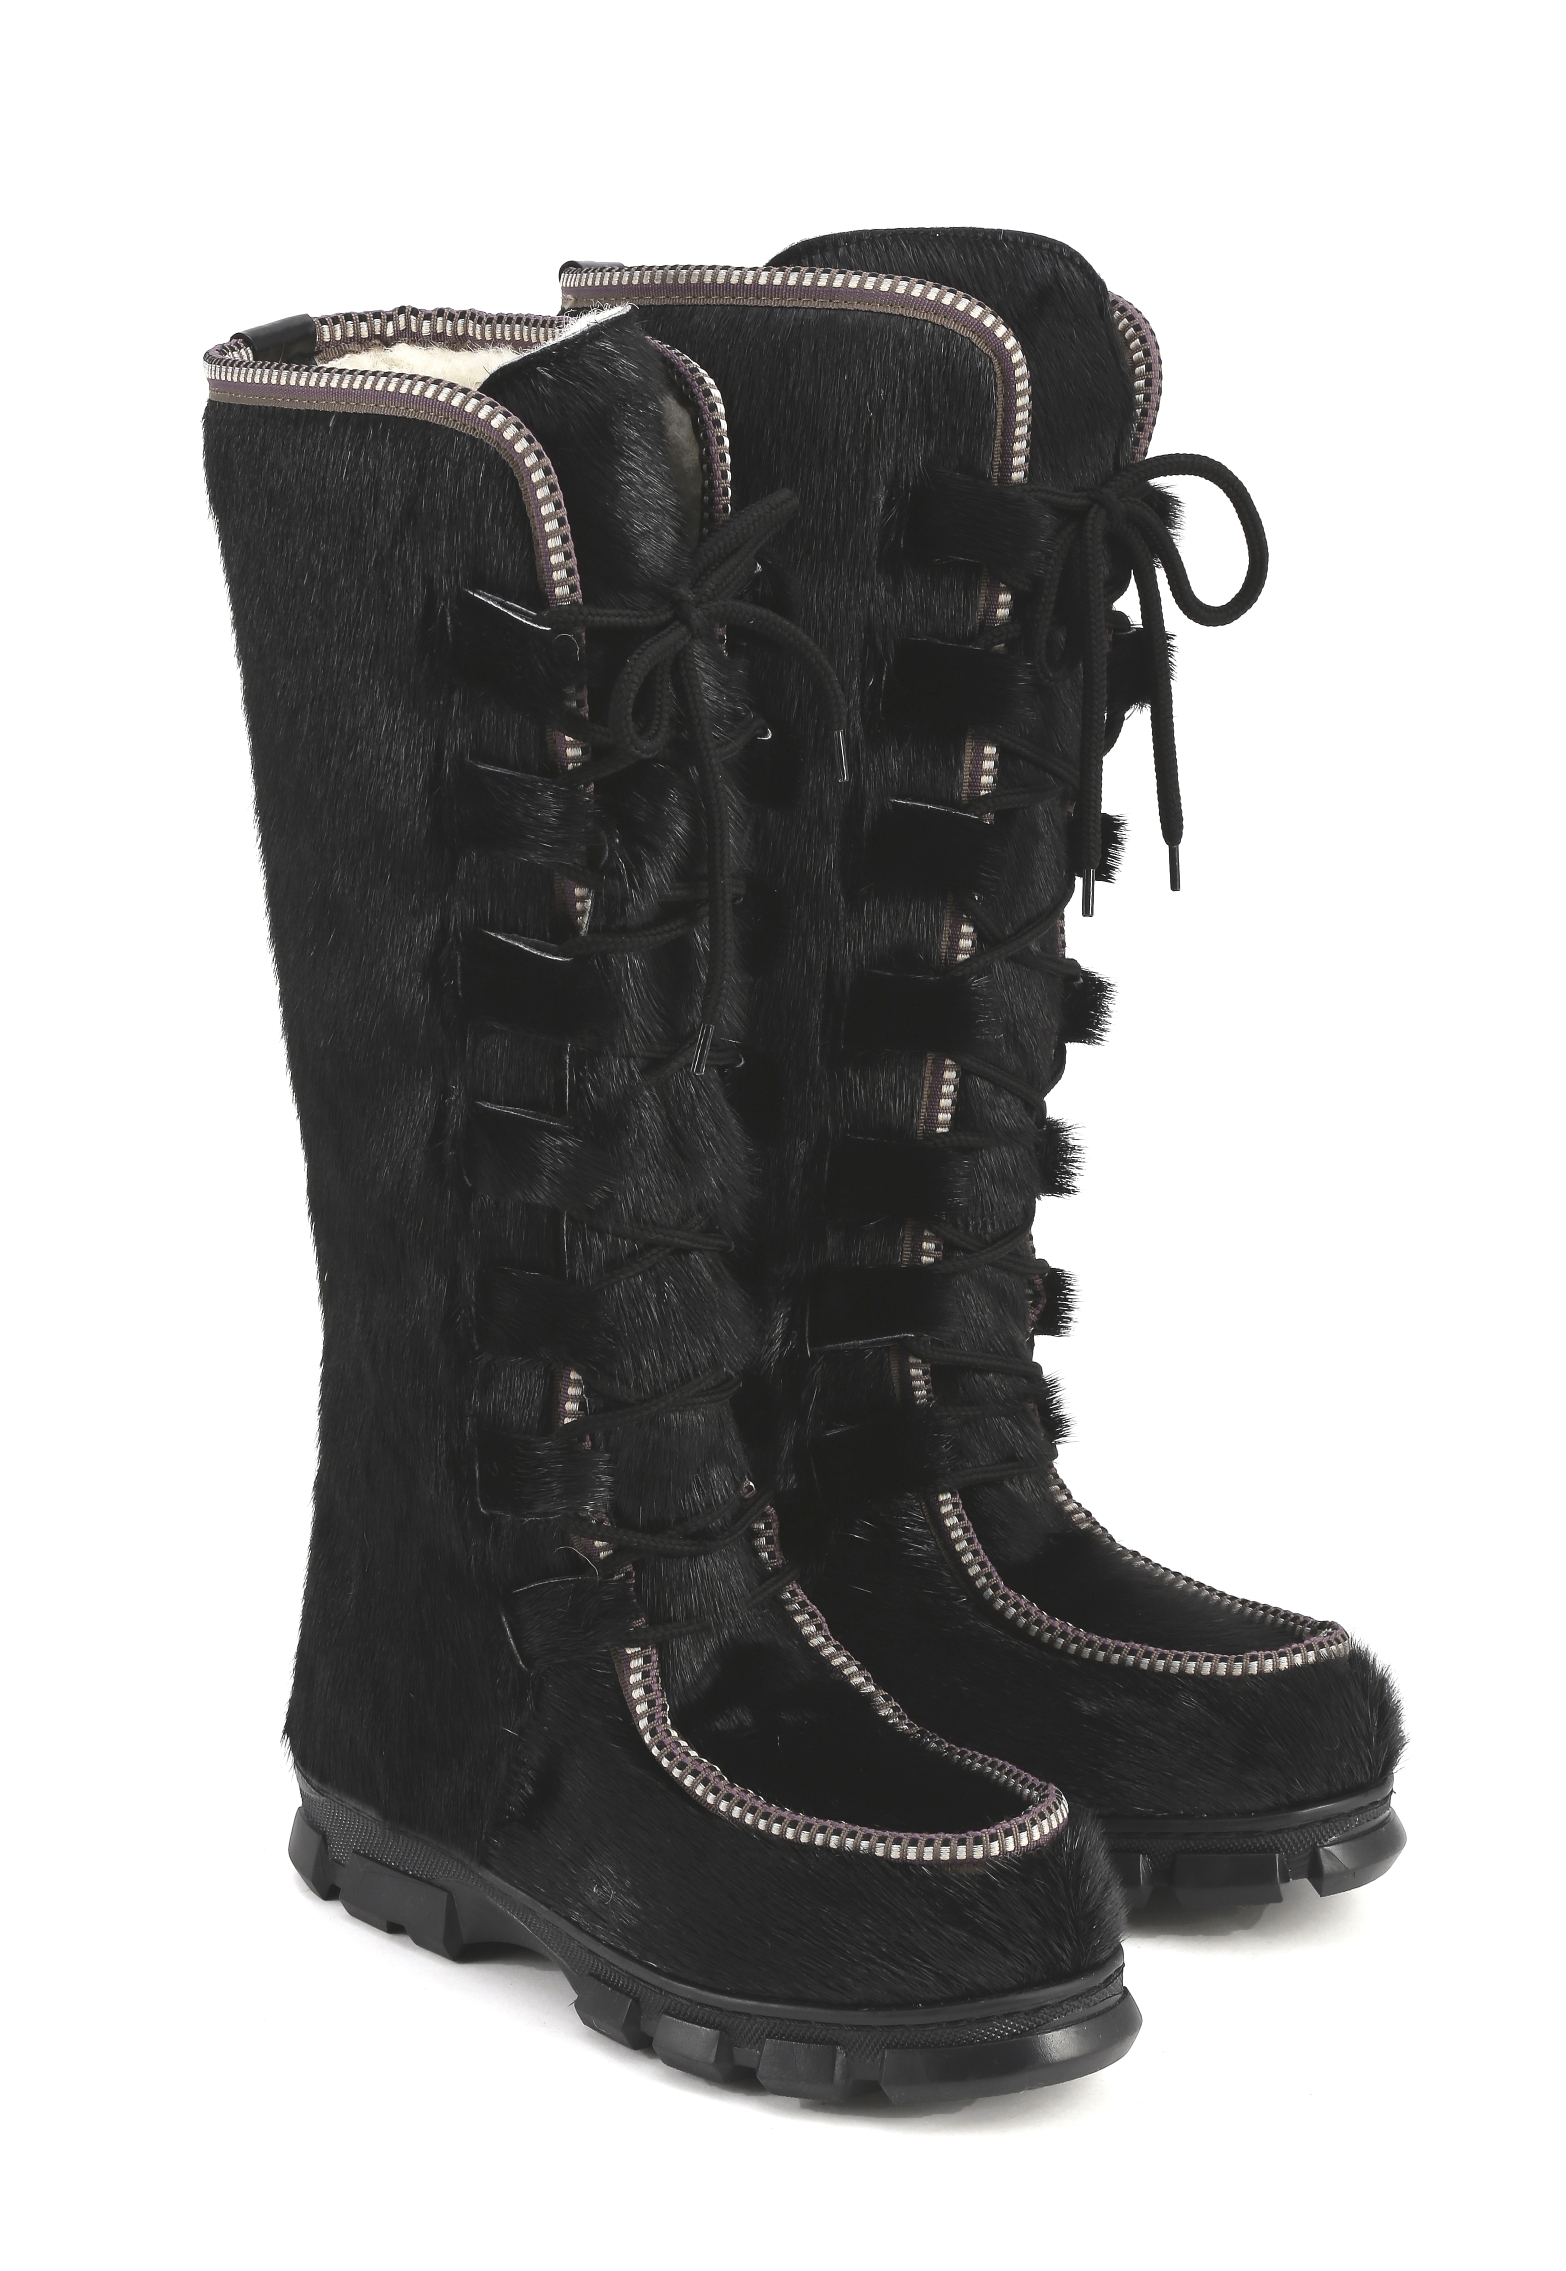 Обувь зимняя, EthnoBoot, black, large, size 36